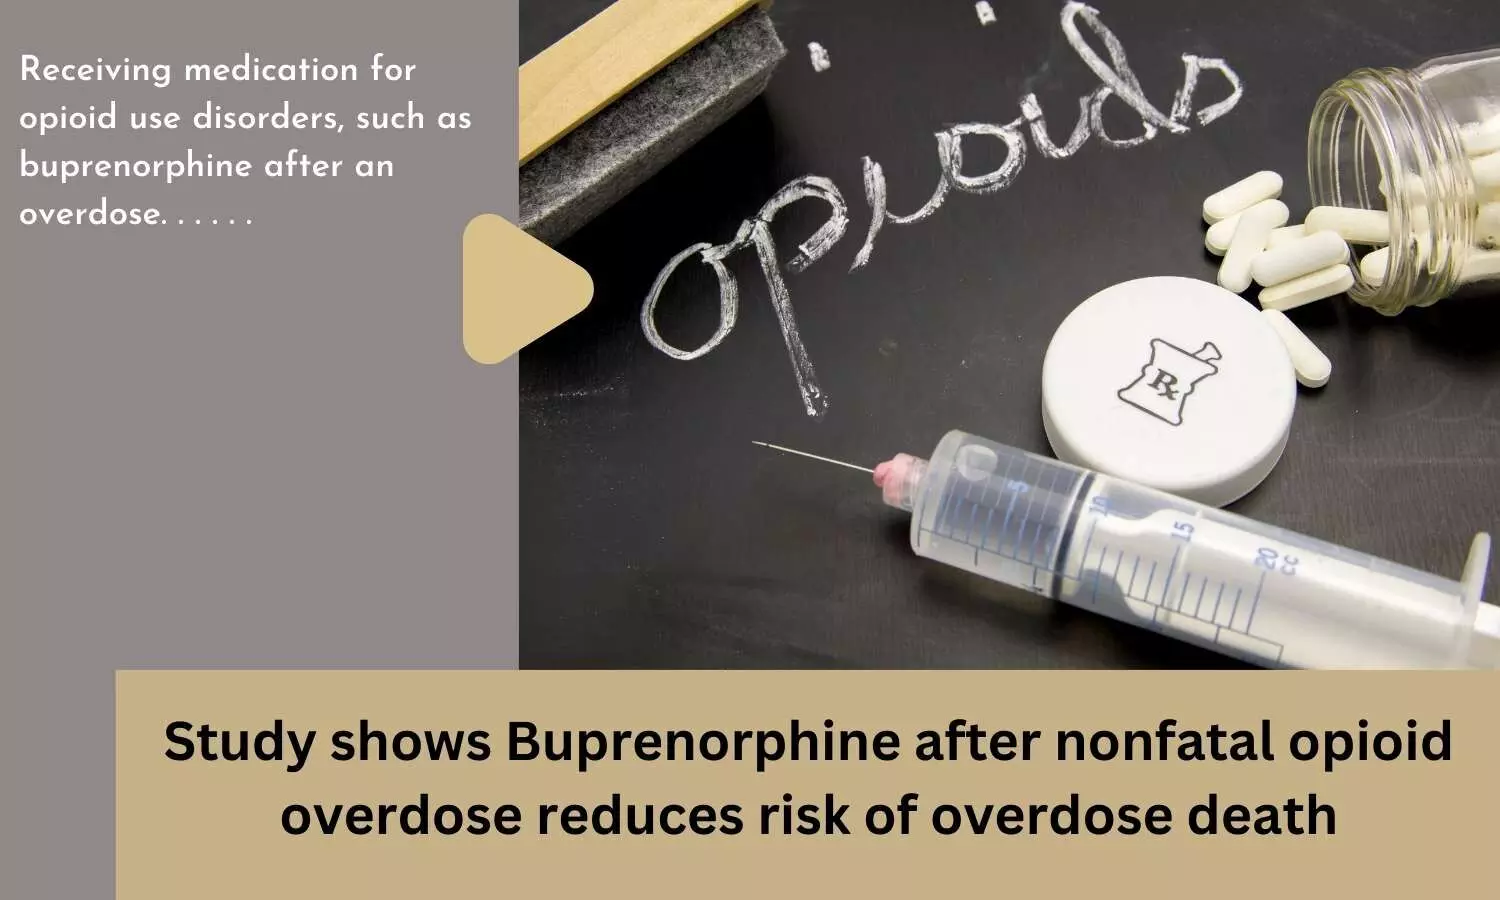 Buprenorphine after nonfatal opioid overdose reduces risk of overdose death